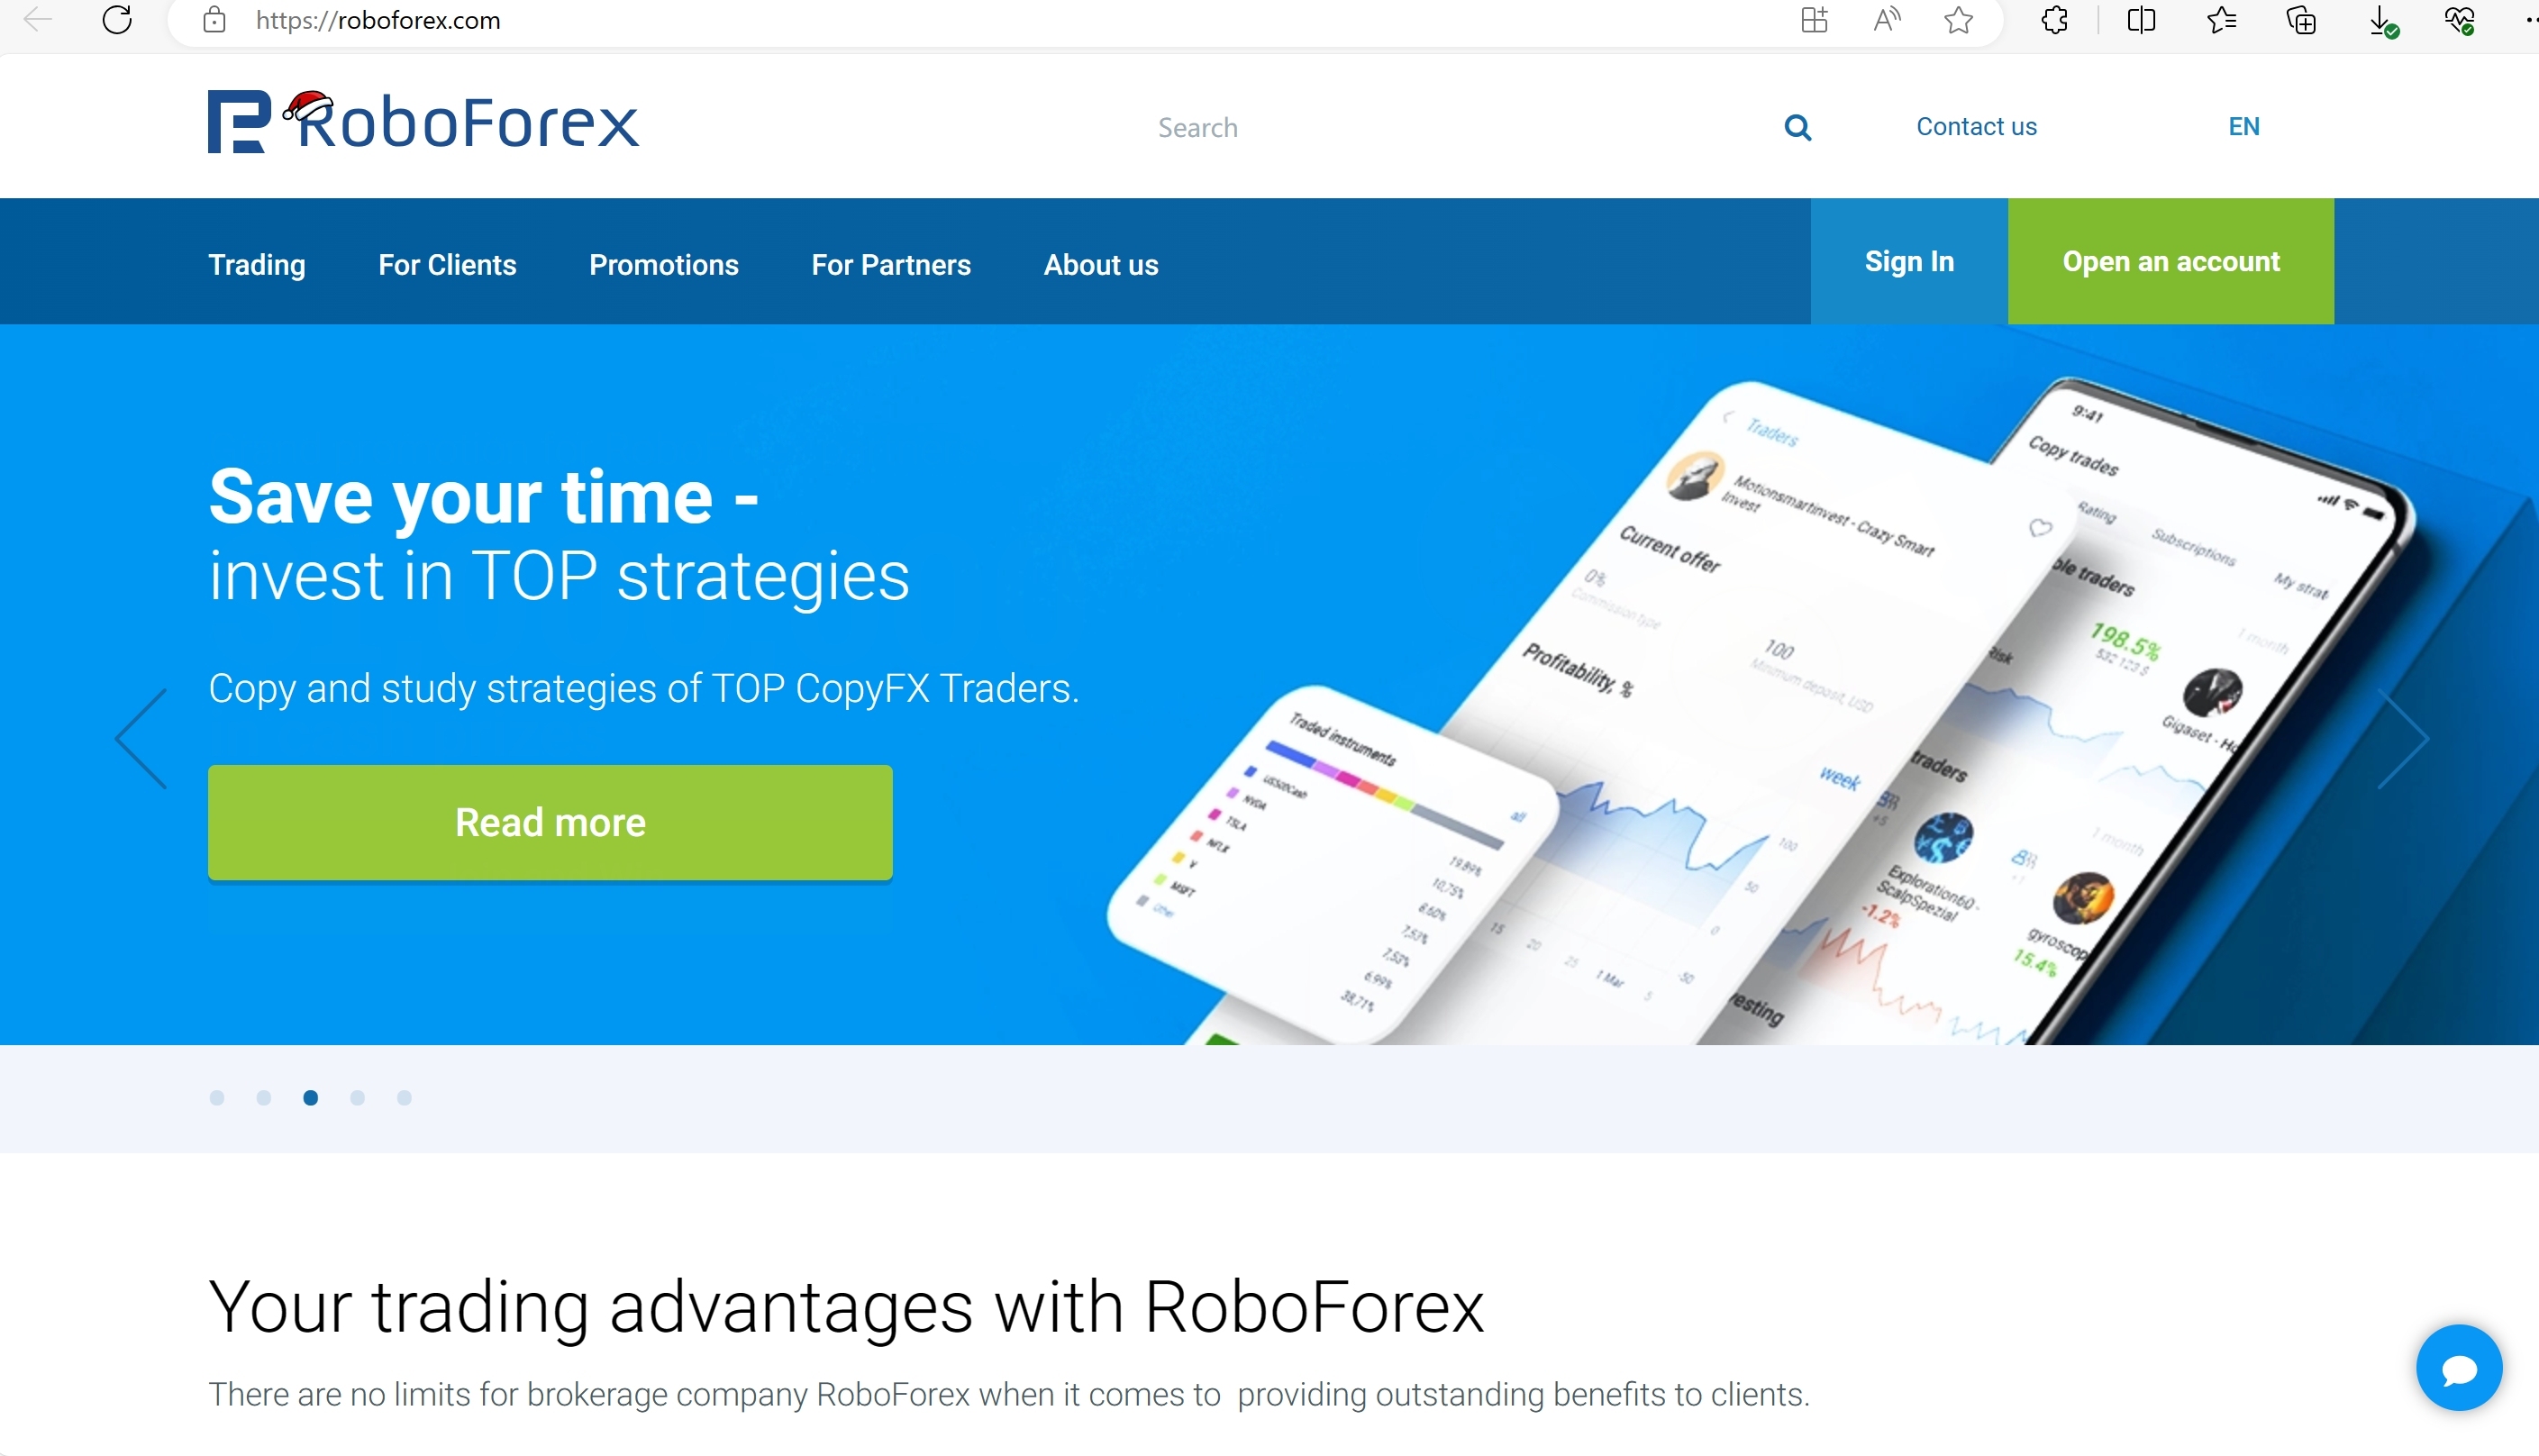 RoboForex's homepage